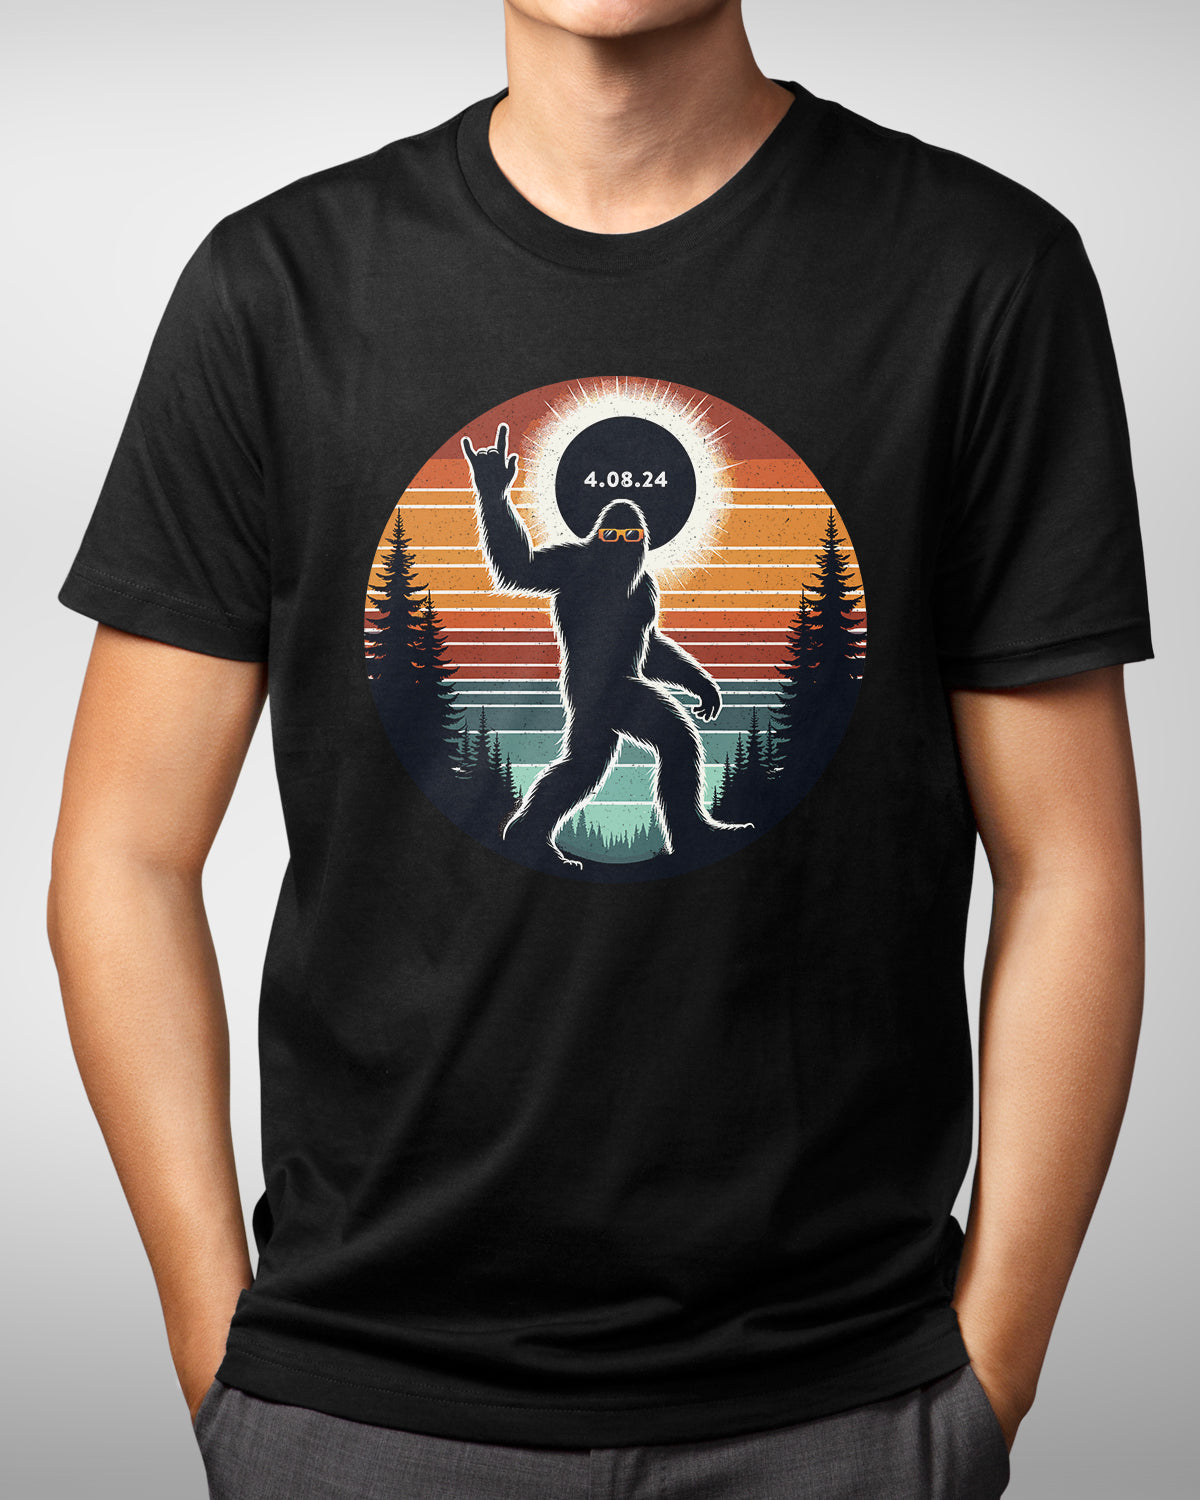 Bigfoot Solar Eclipse 2024 Shirt, Retro Sasquatch Lover Tee, Funny Yeti Camping & Hiking Shirt, April 8 Gift for Bigfoot Believers